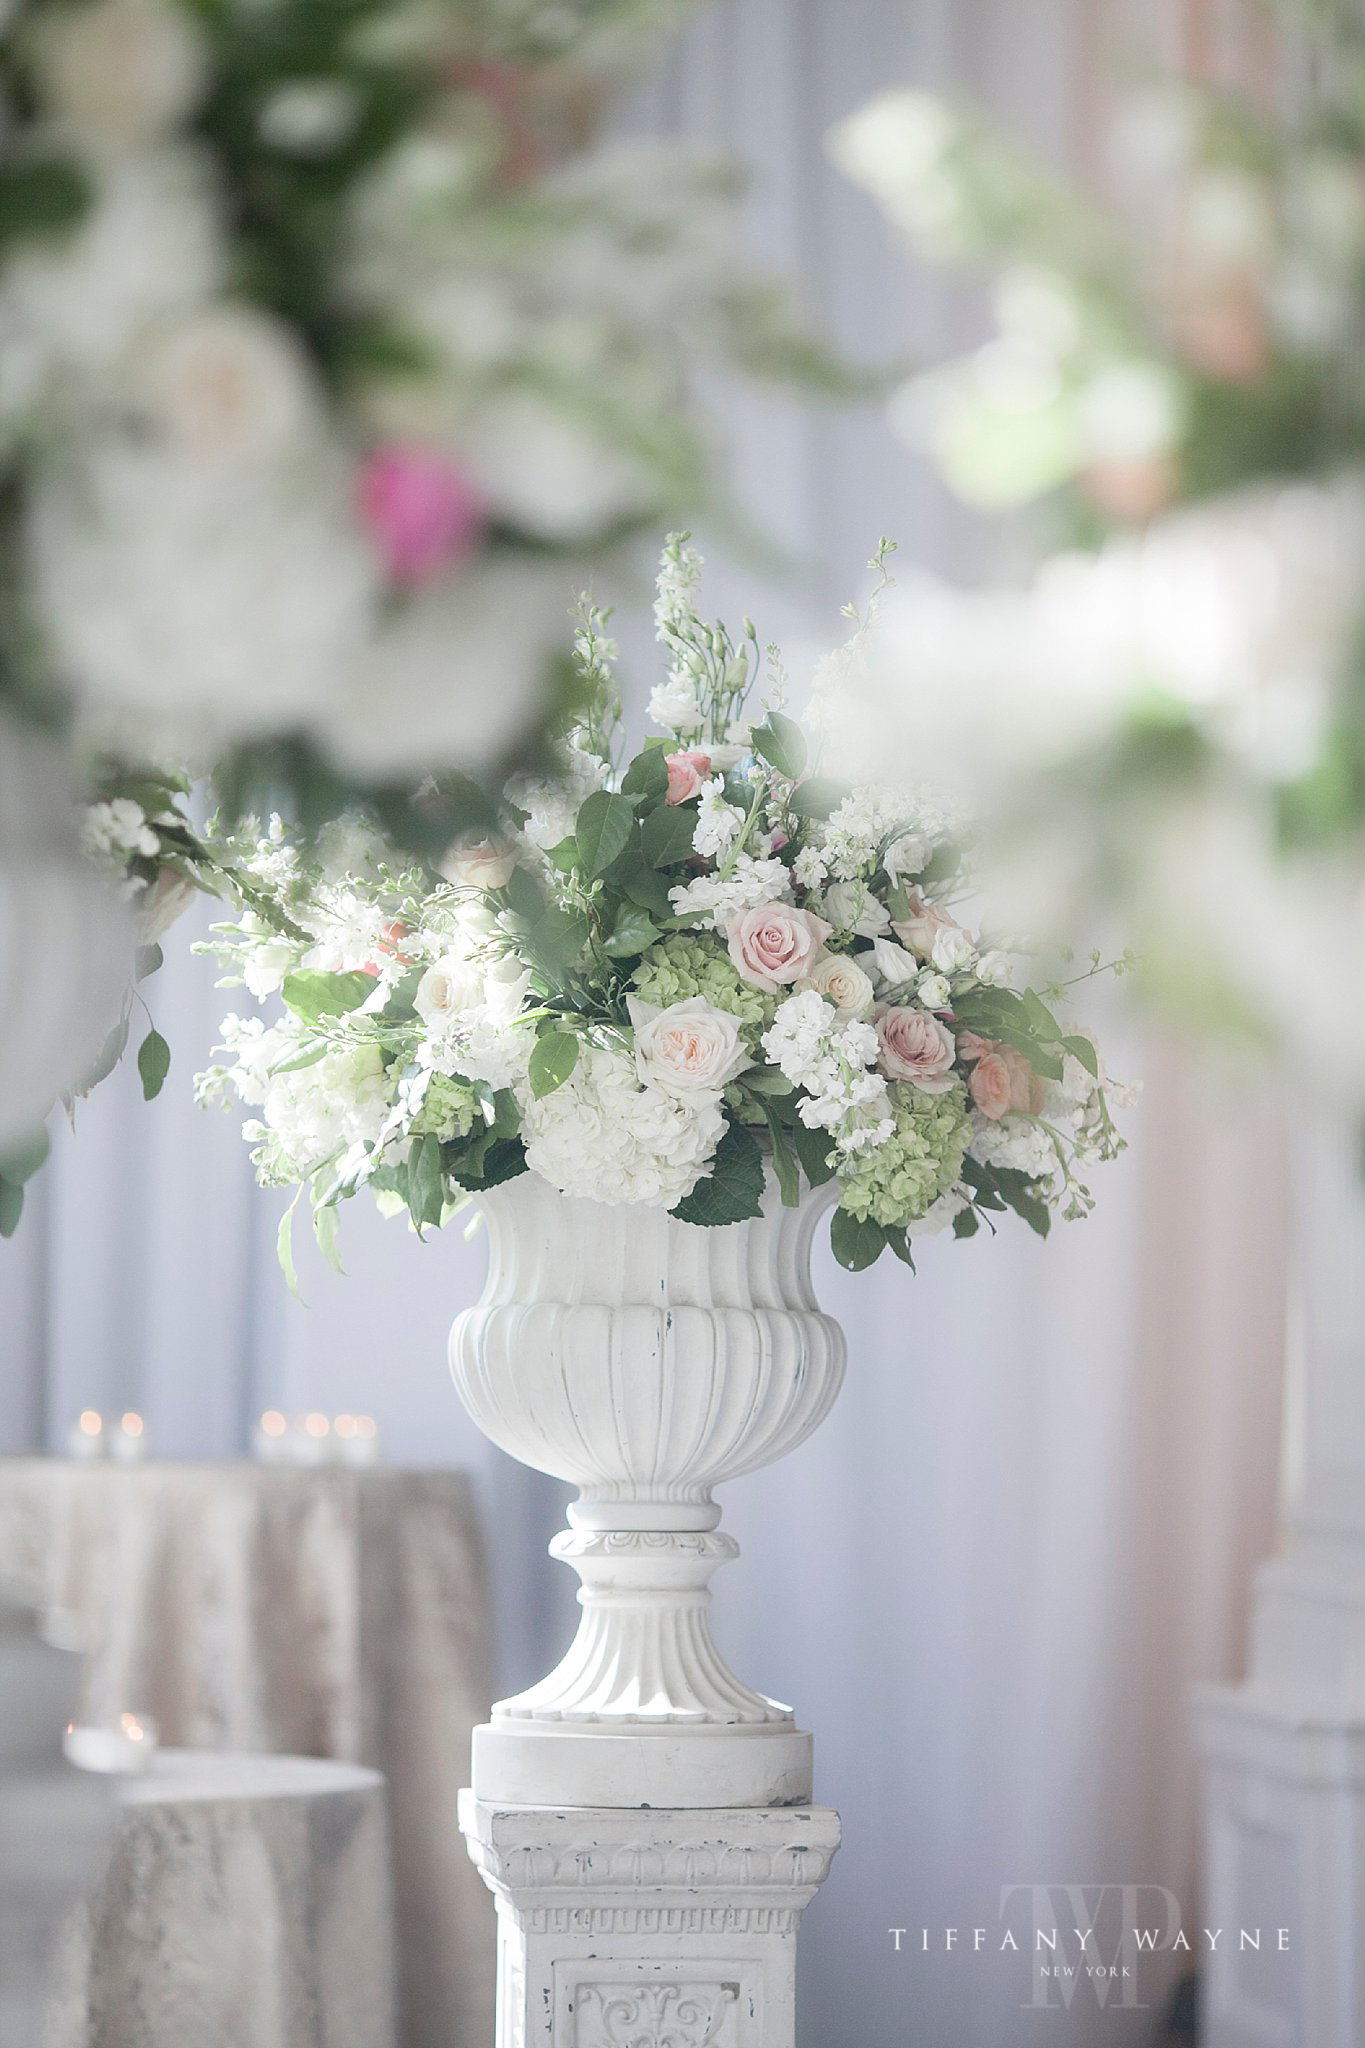 Renaissance Floral Design arrangements for Renaissance Hotel wedding day photographed by Tiffany Wayne Photography